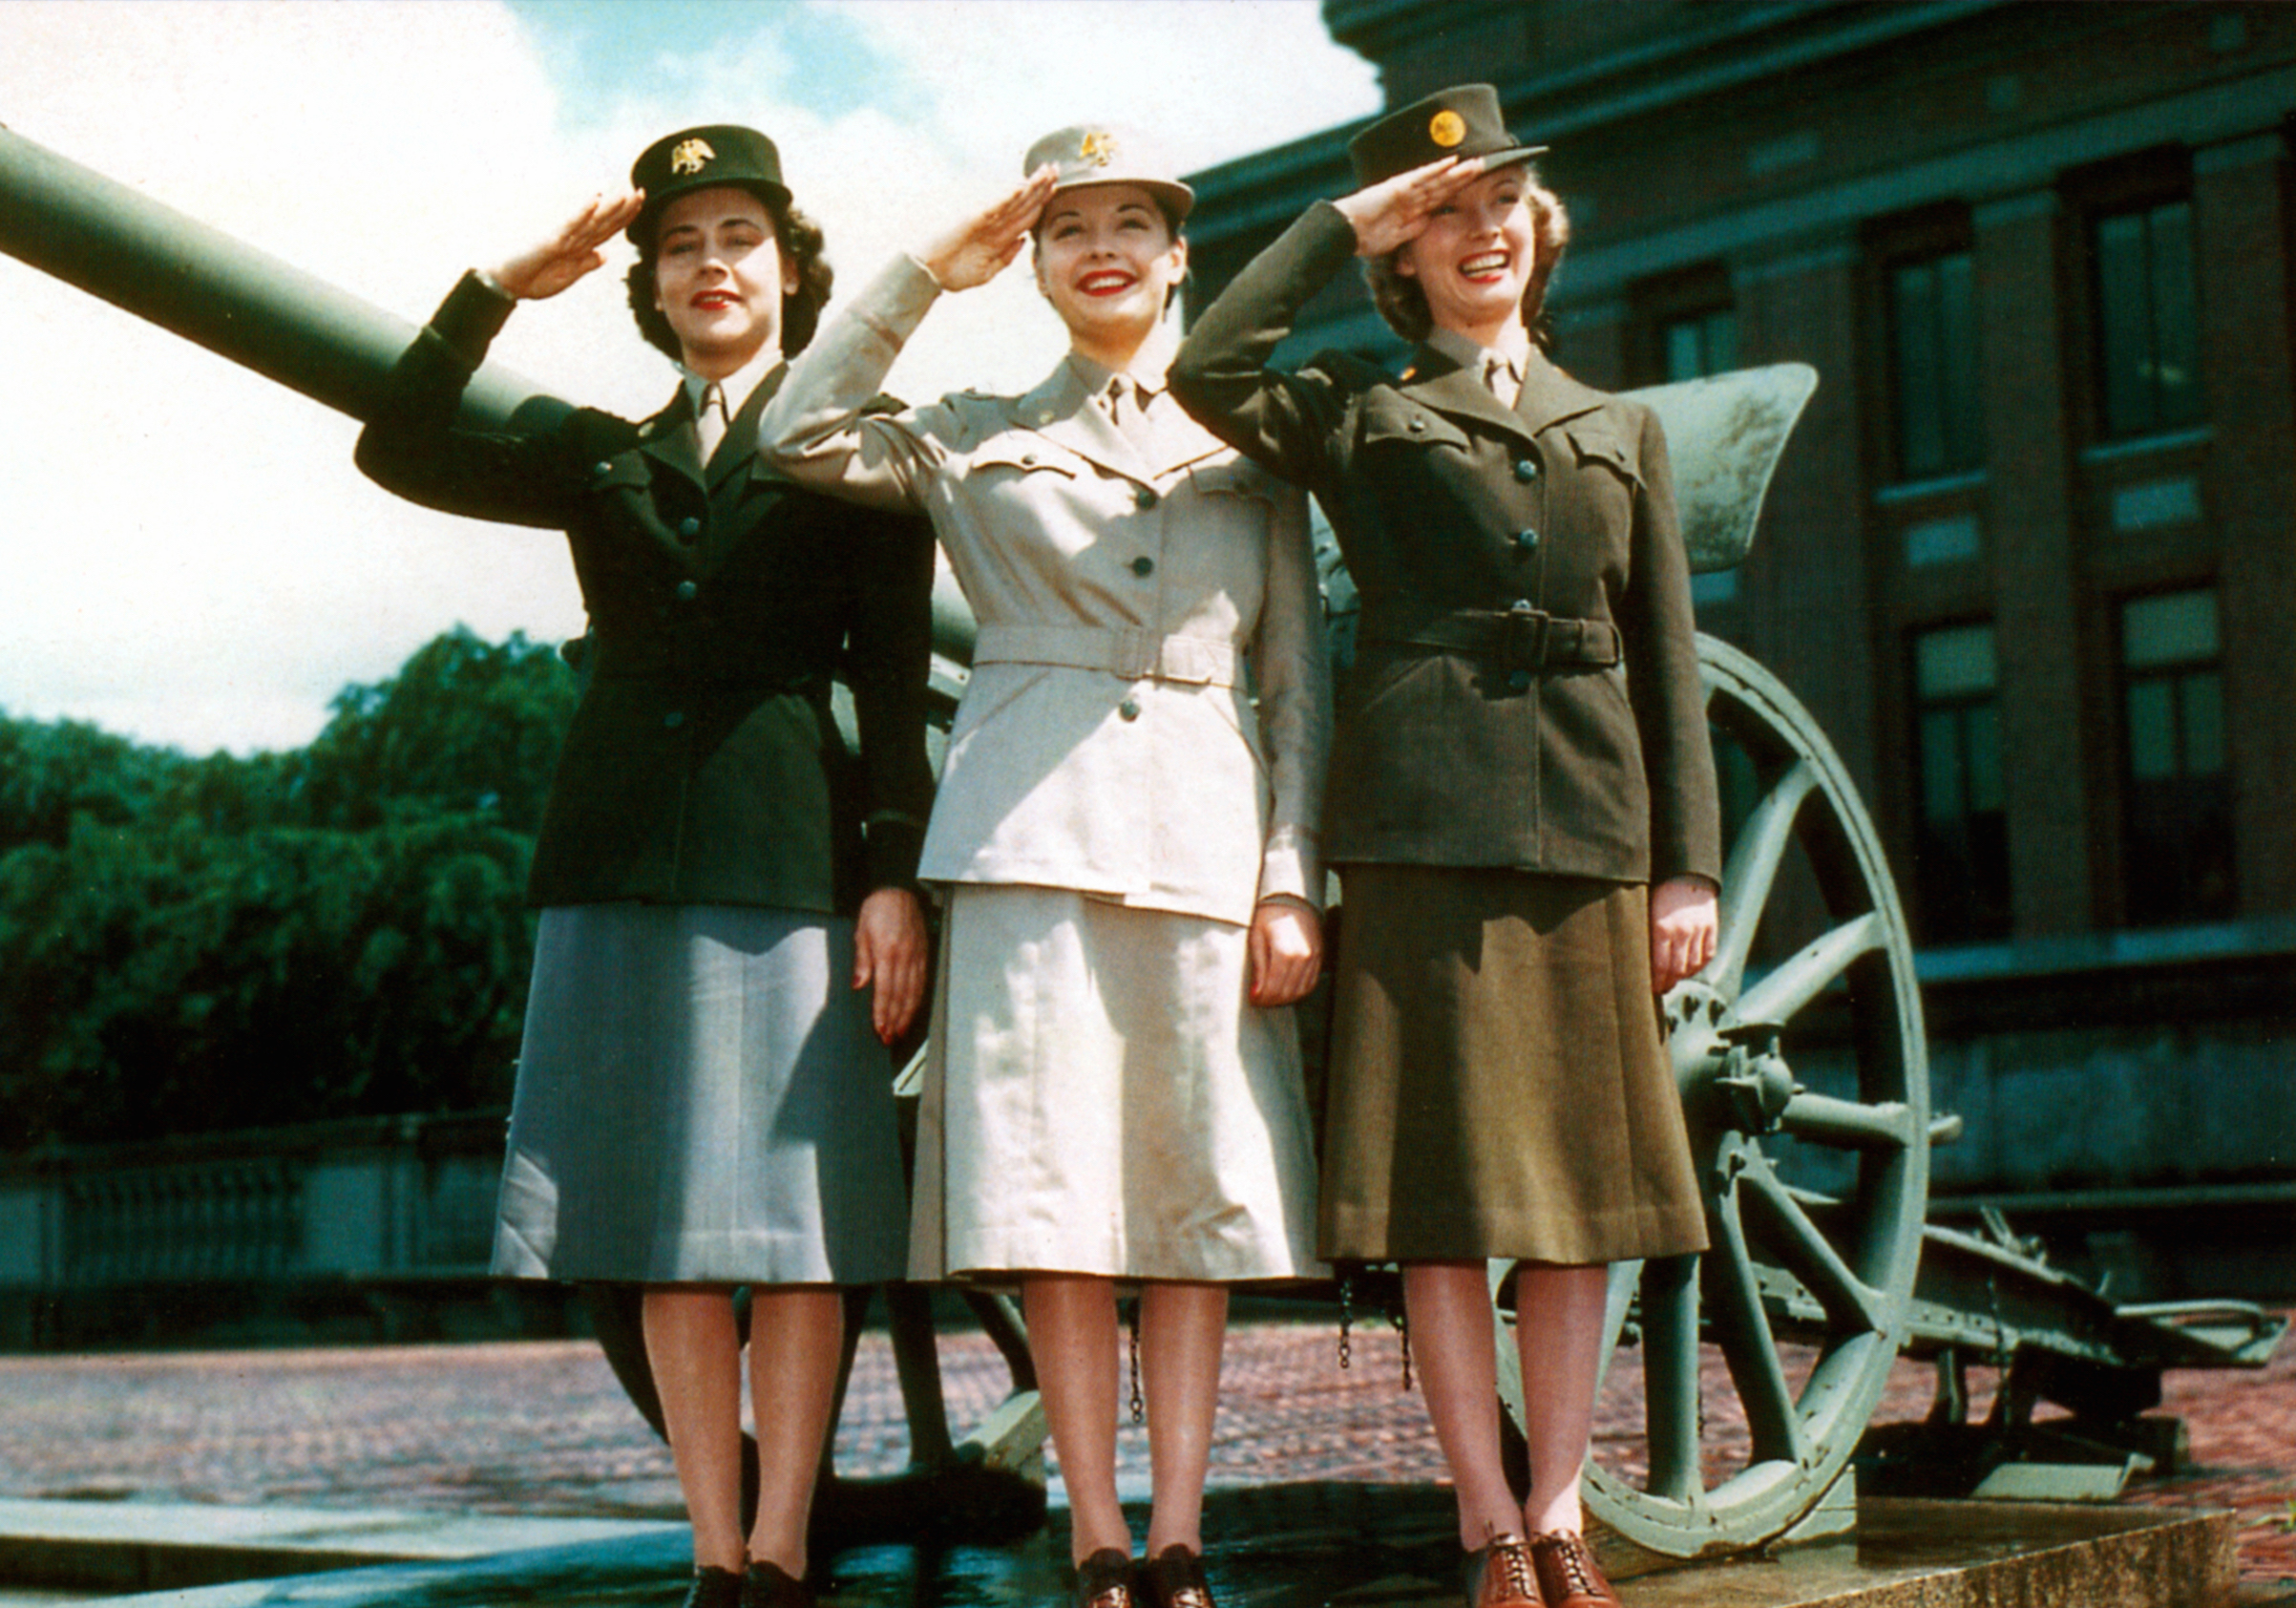 Women’s Auxiliary Army Corps (WAAC) uniform presentation in 1942 (Galerie Bilderwelt/Getty Images)